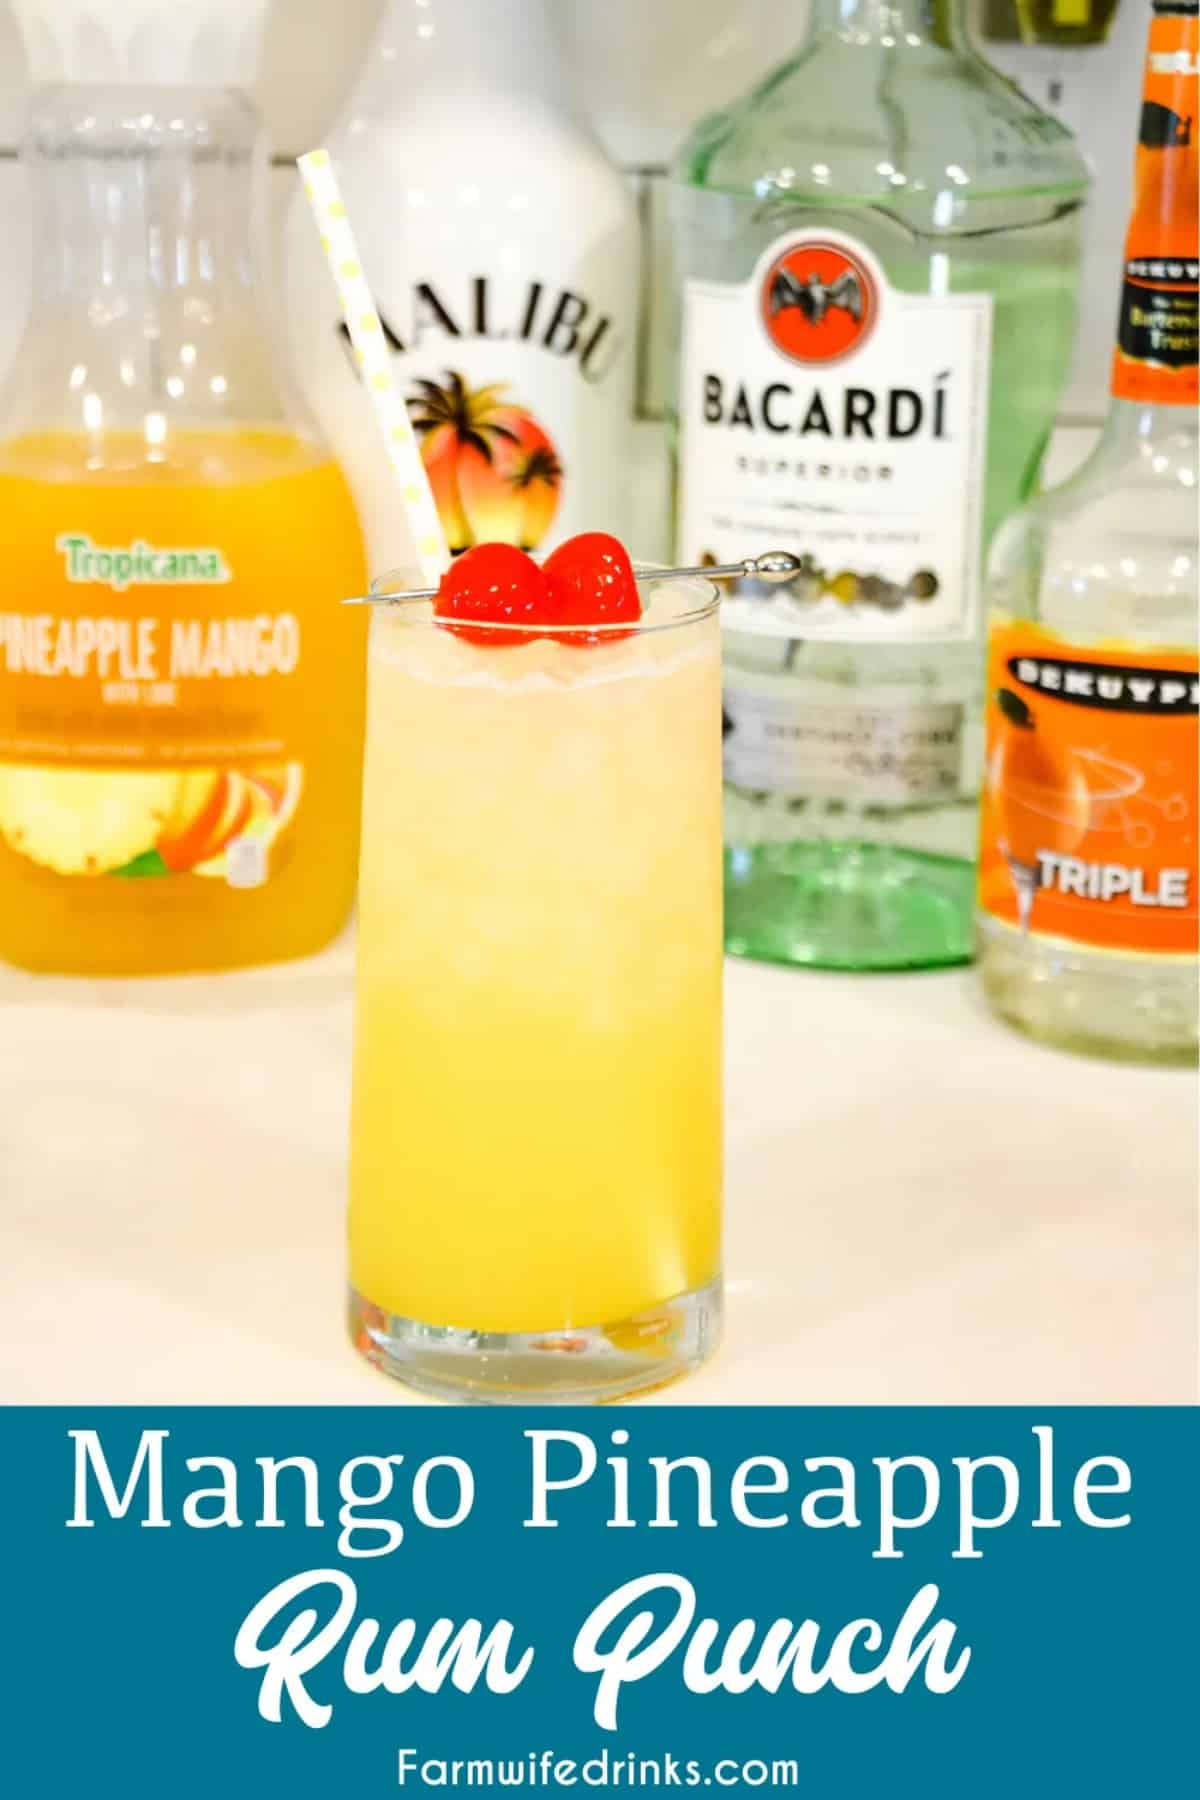 Mango Pineapple Rum Punch rum and fruit drinks